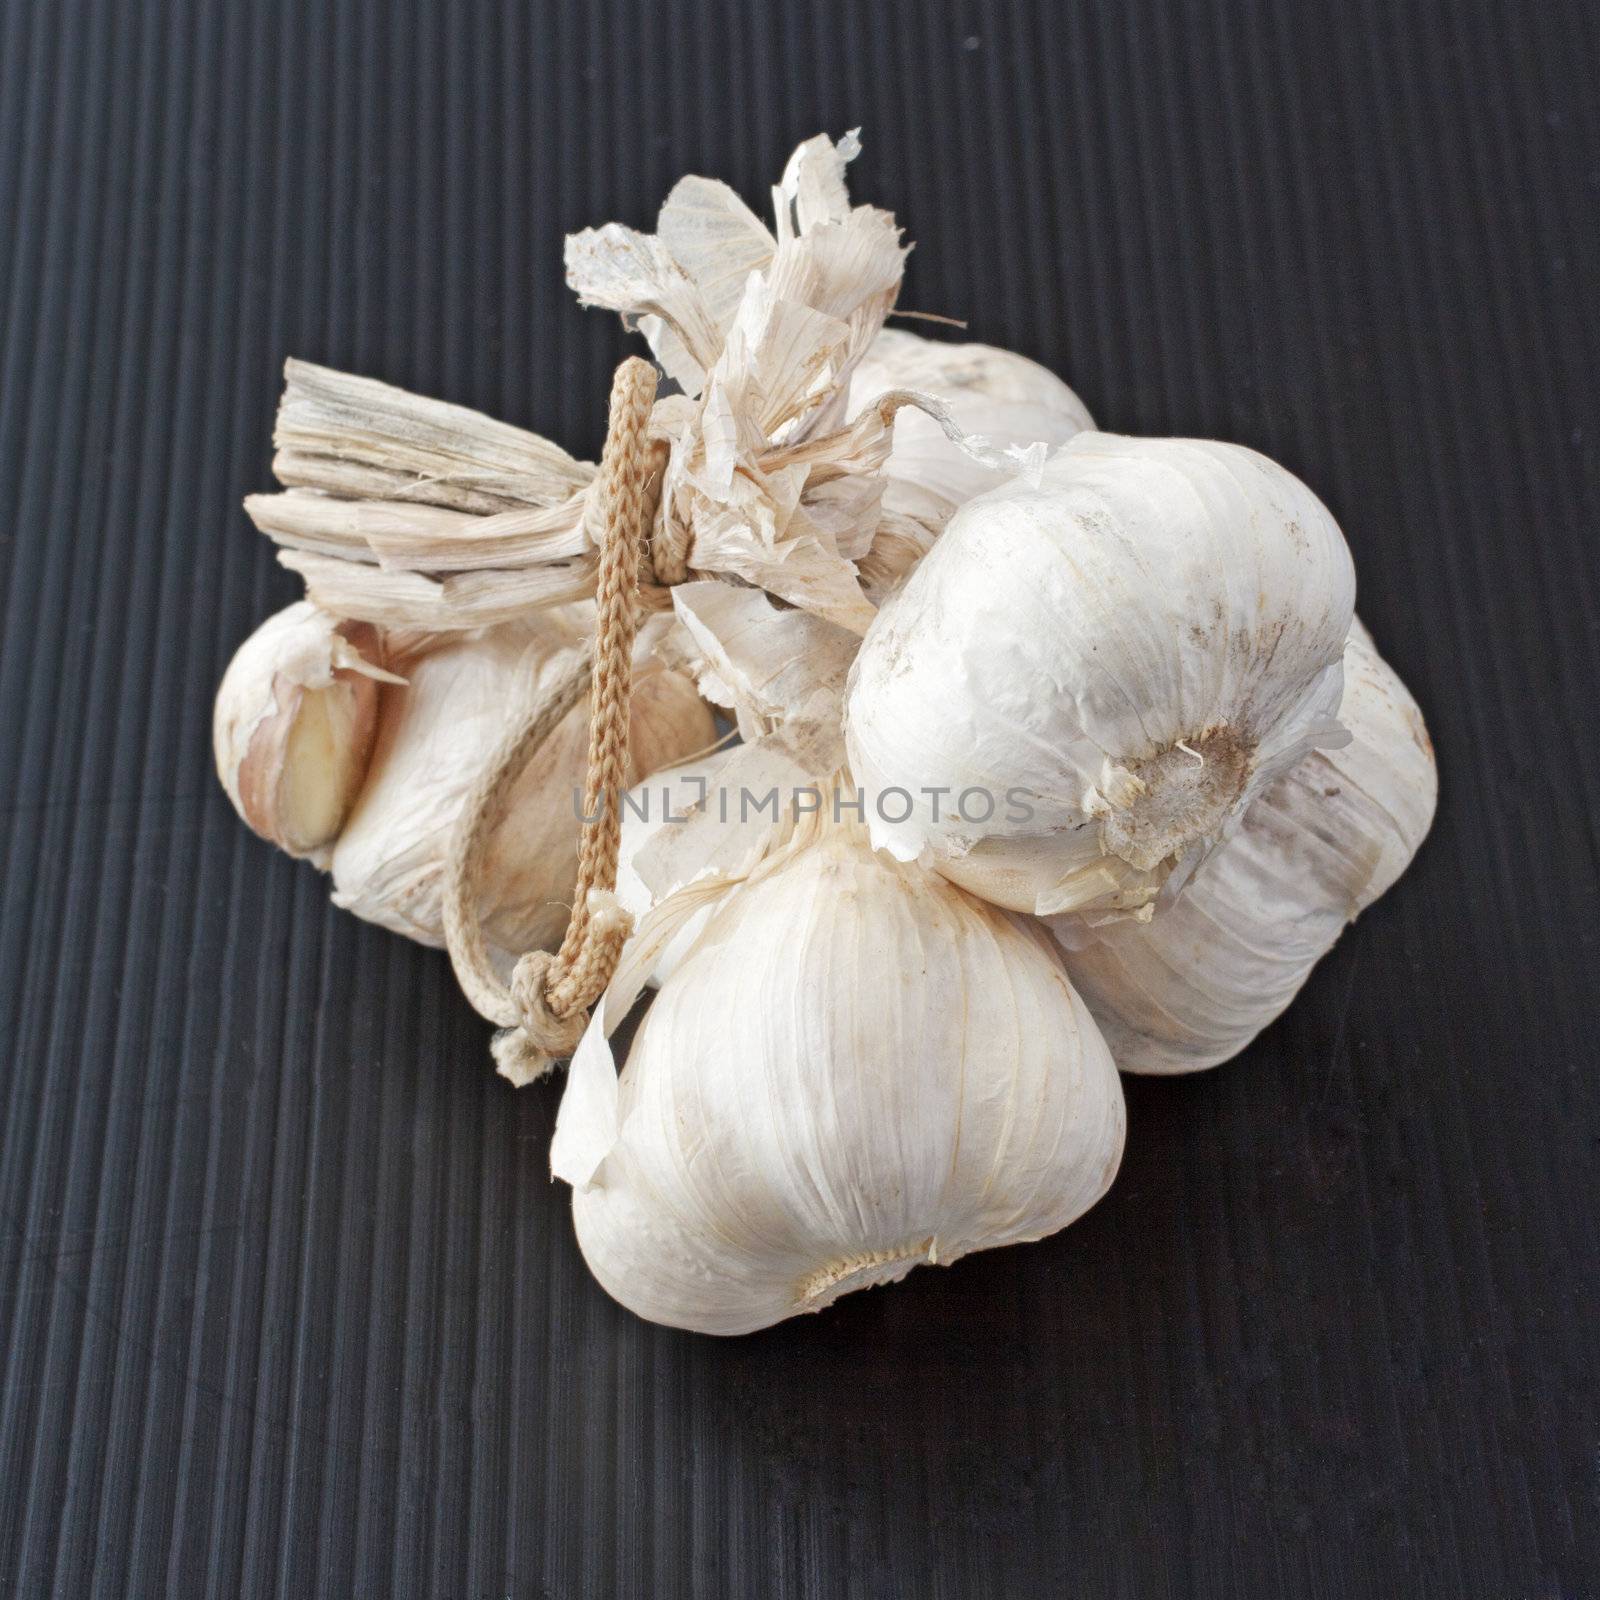 Garlic by Koufax73